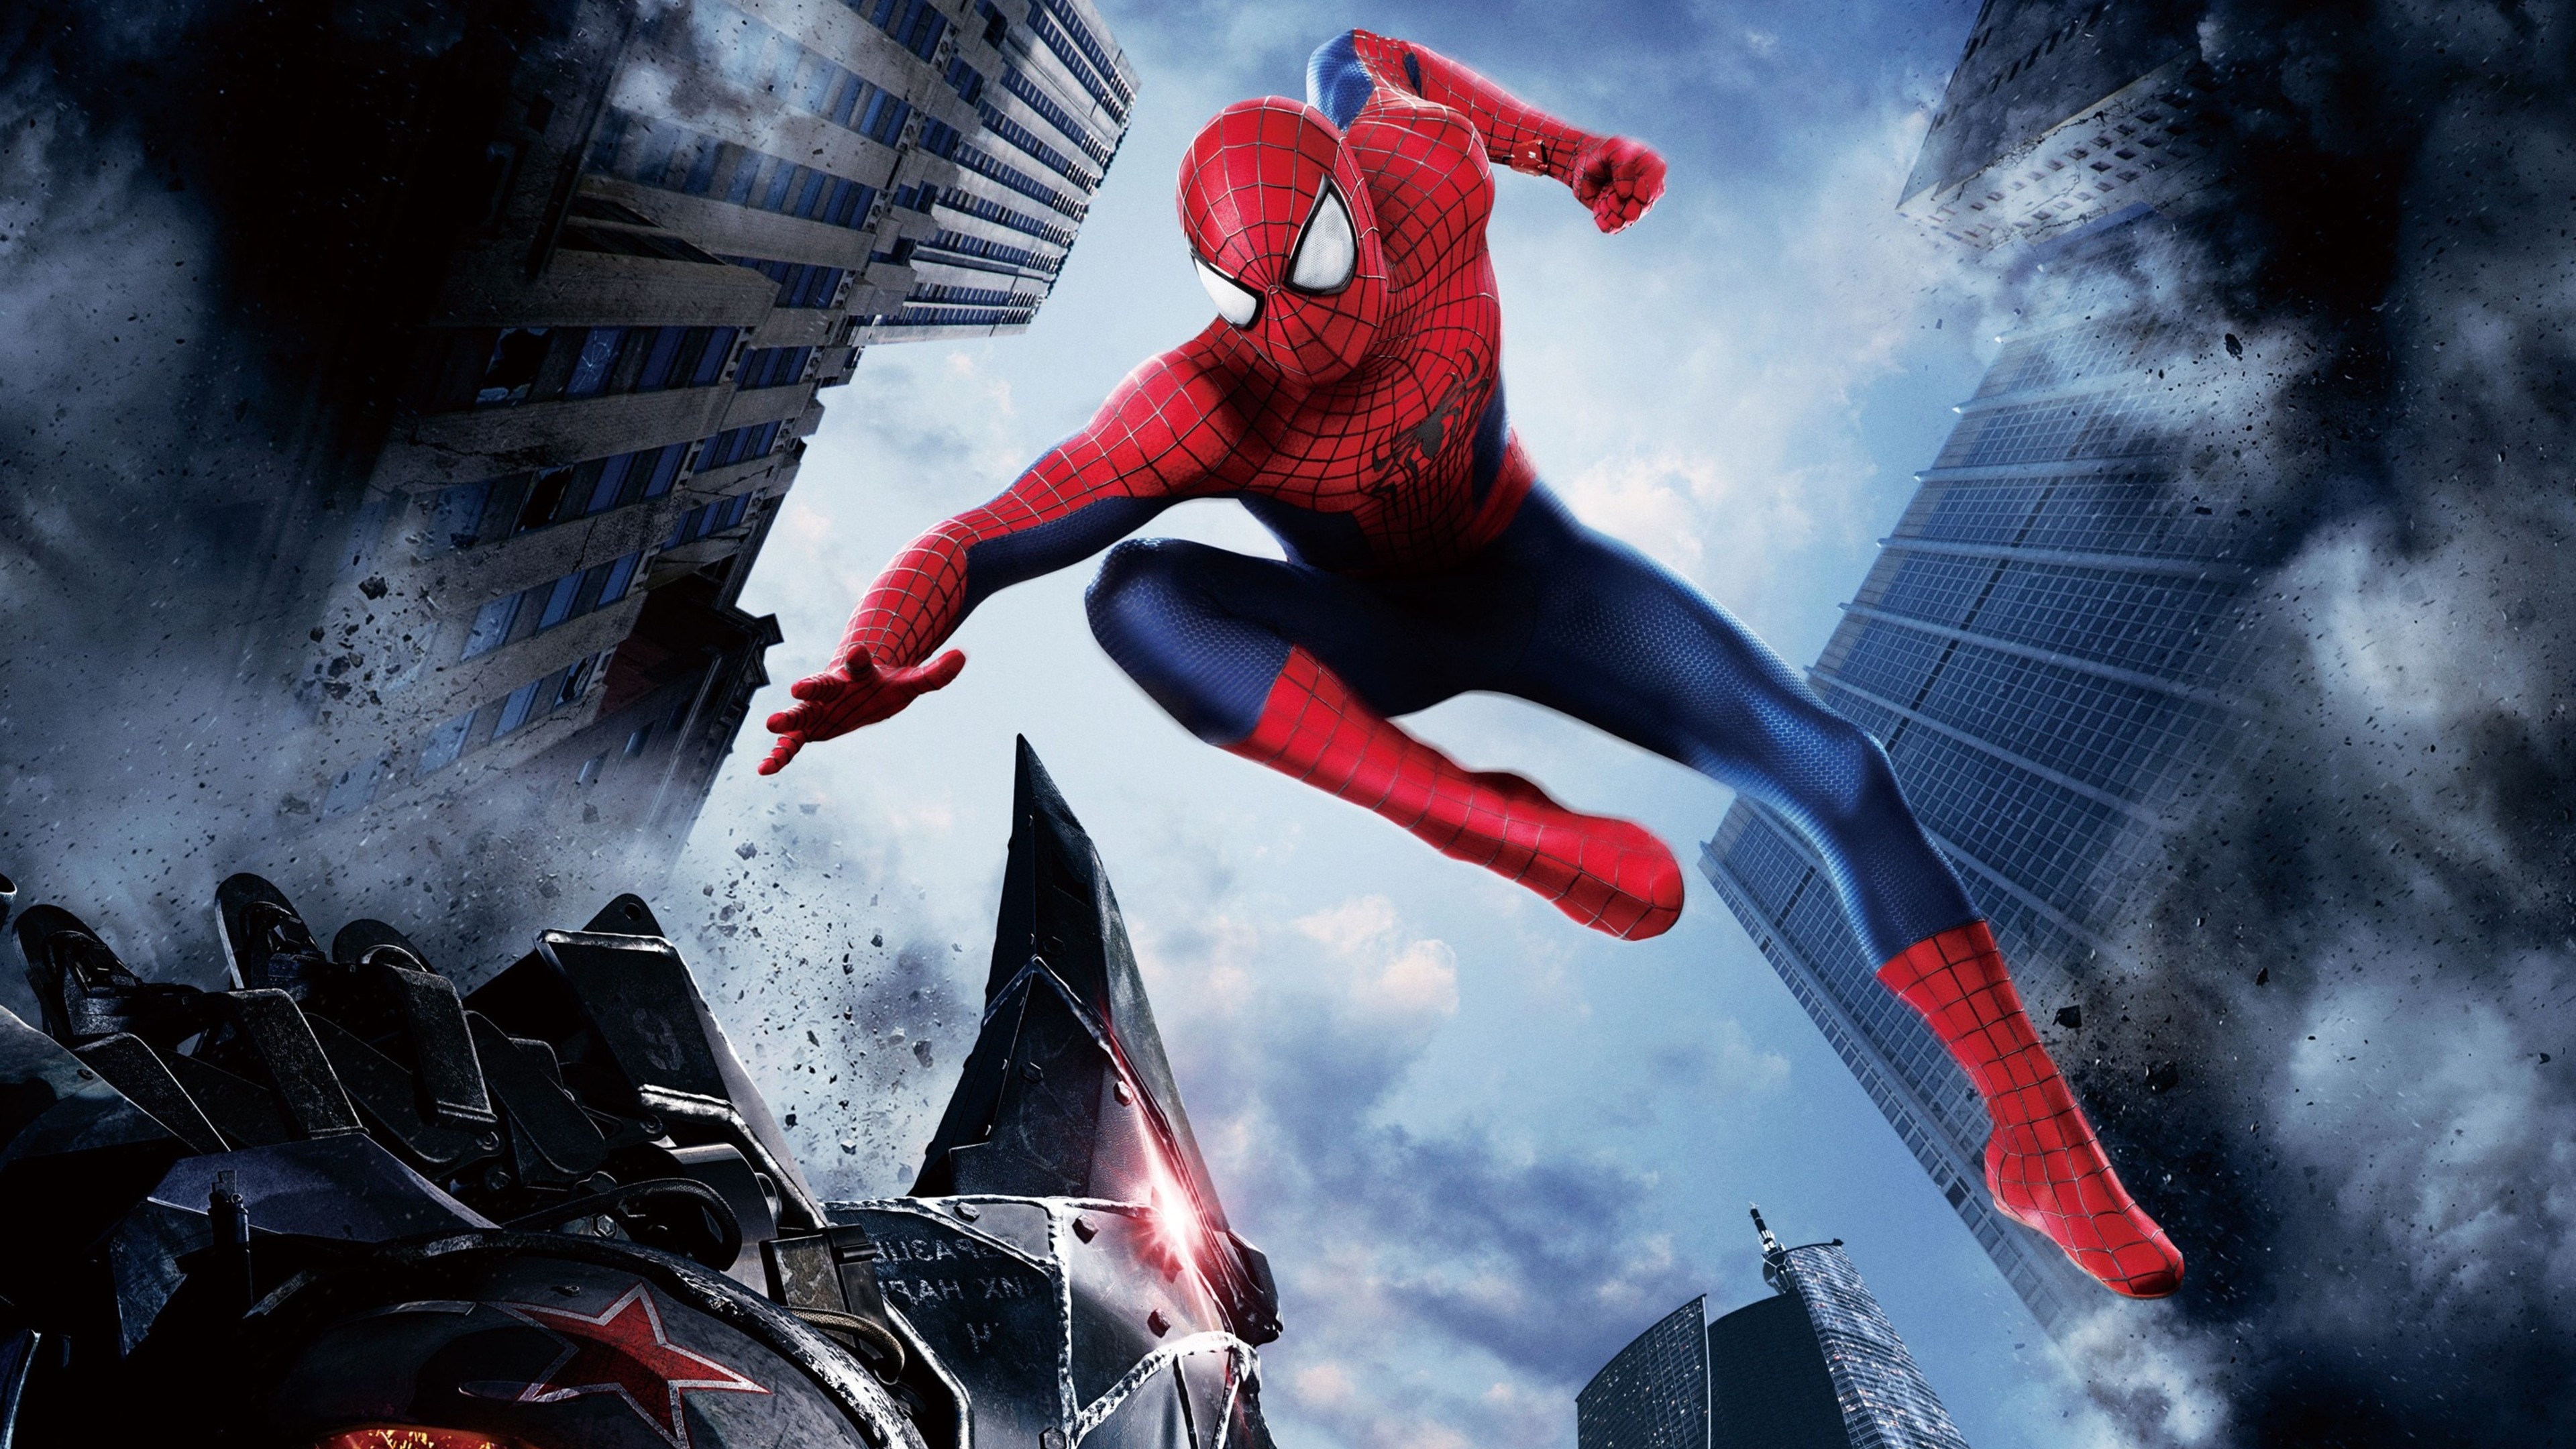 Spider-Man Movies, 4K wallpaper, Stunning visuals, Superhero action, 3840x2160 4K Desktop